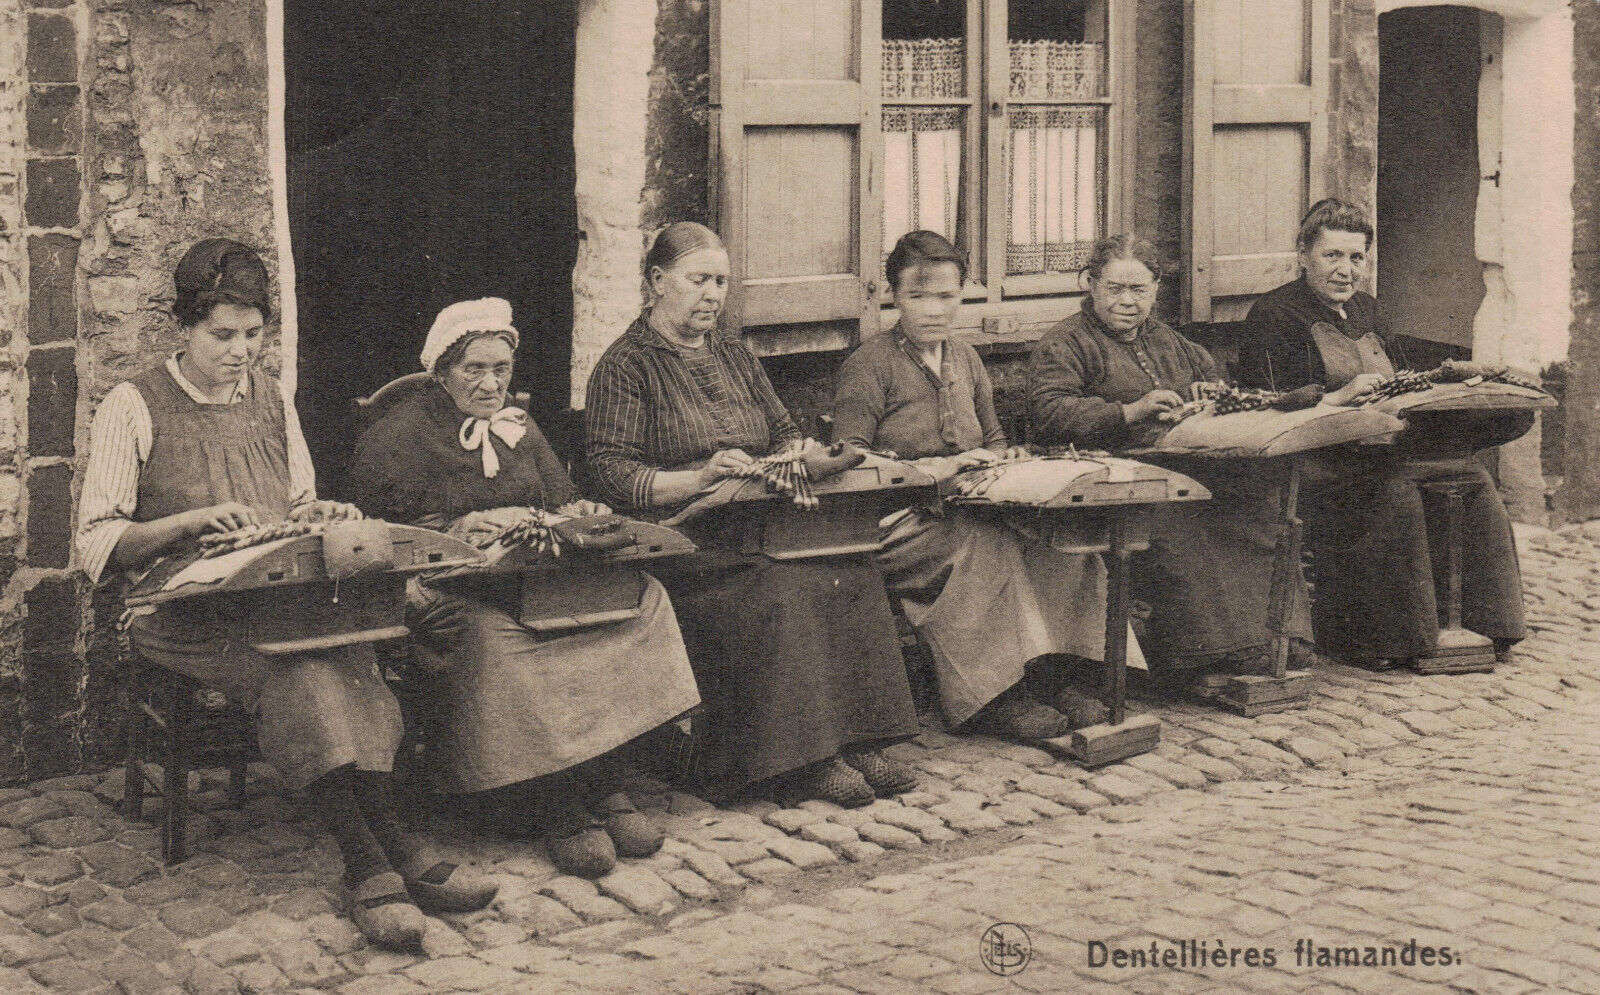 Flanders, Belgium, bobbin lace maker women, vintage postcard